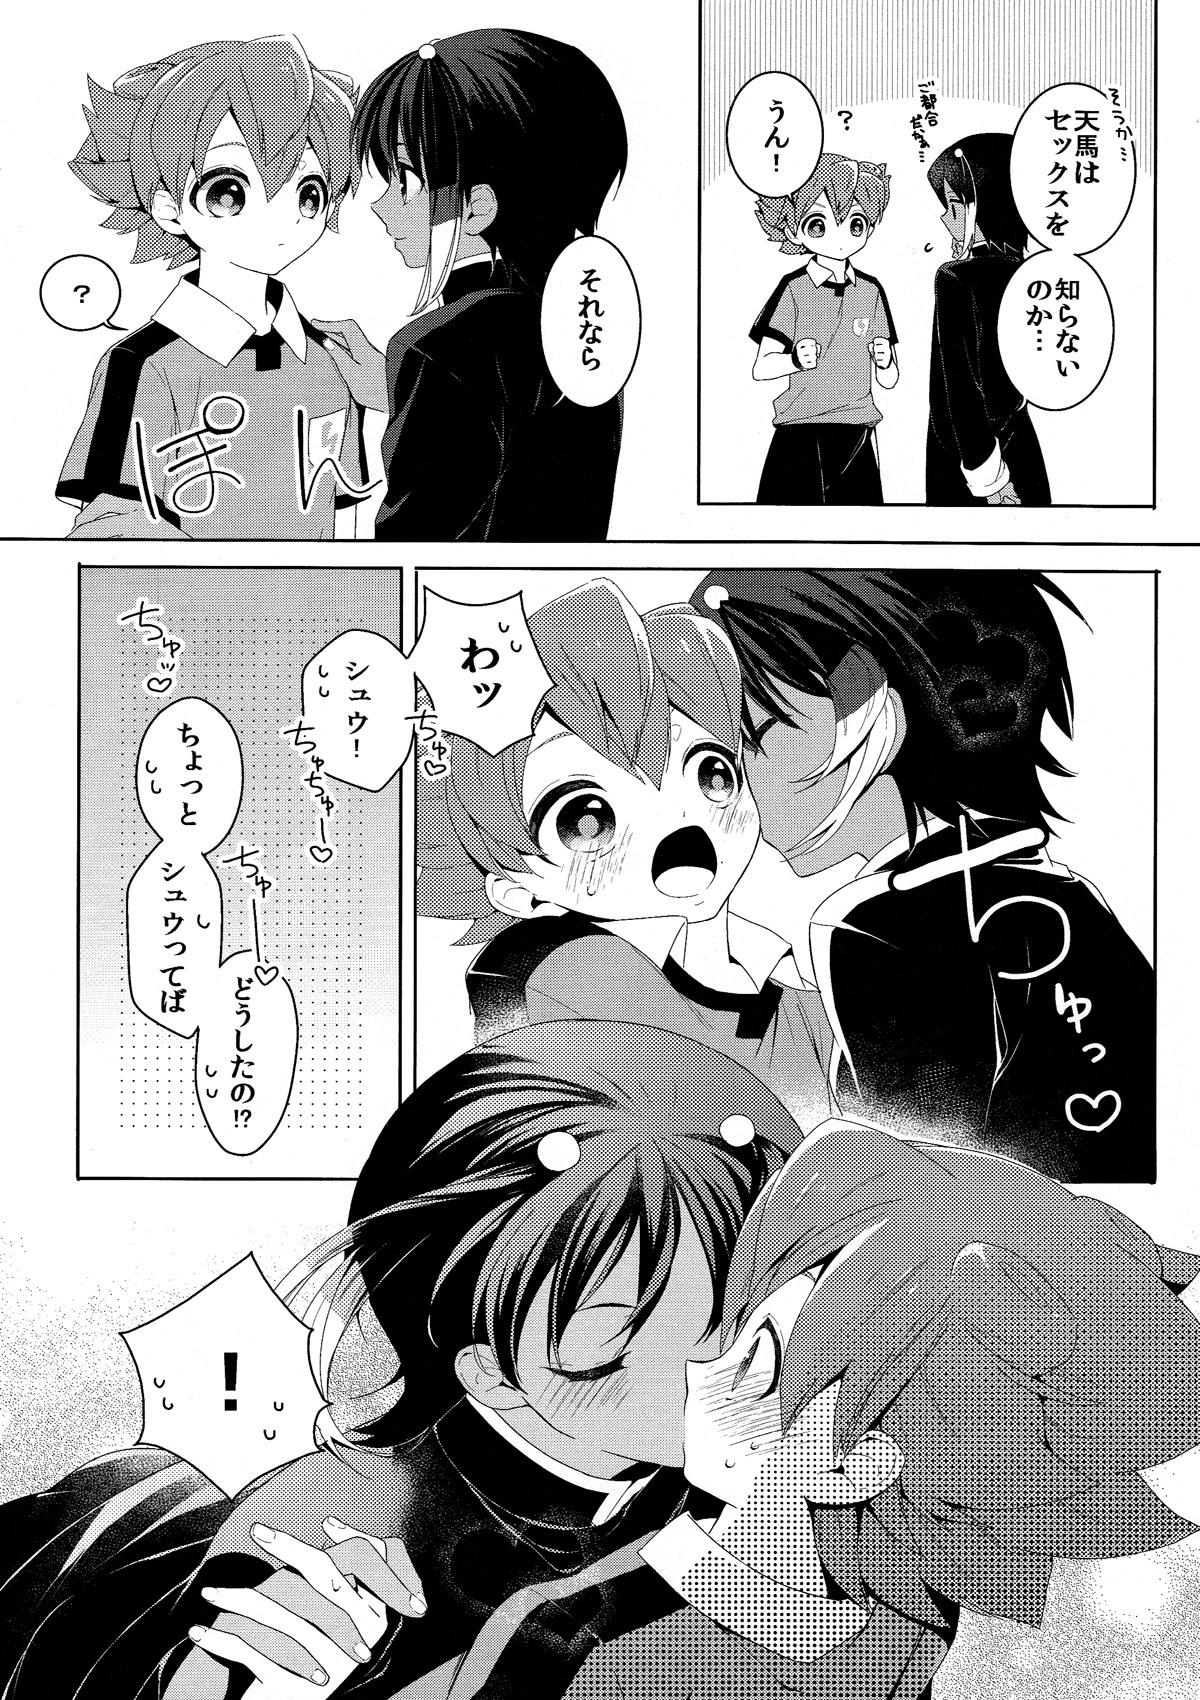 Lesbians Kimi Iro Sekai - Inazuma eleven go Lingerie - Page 6